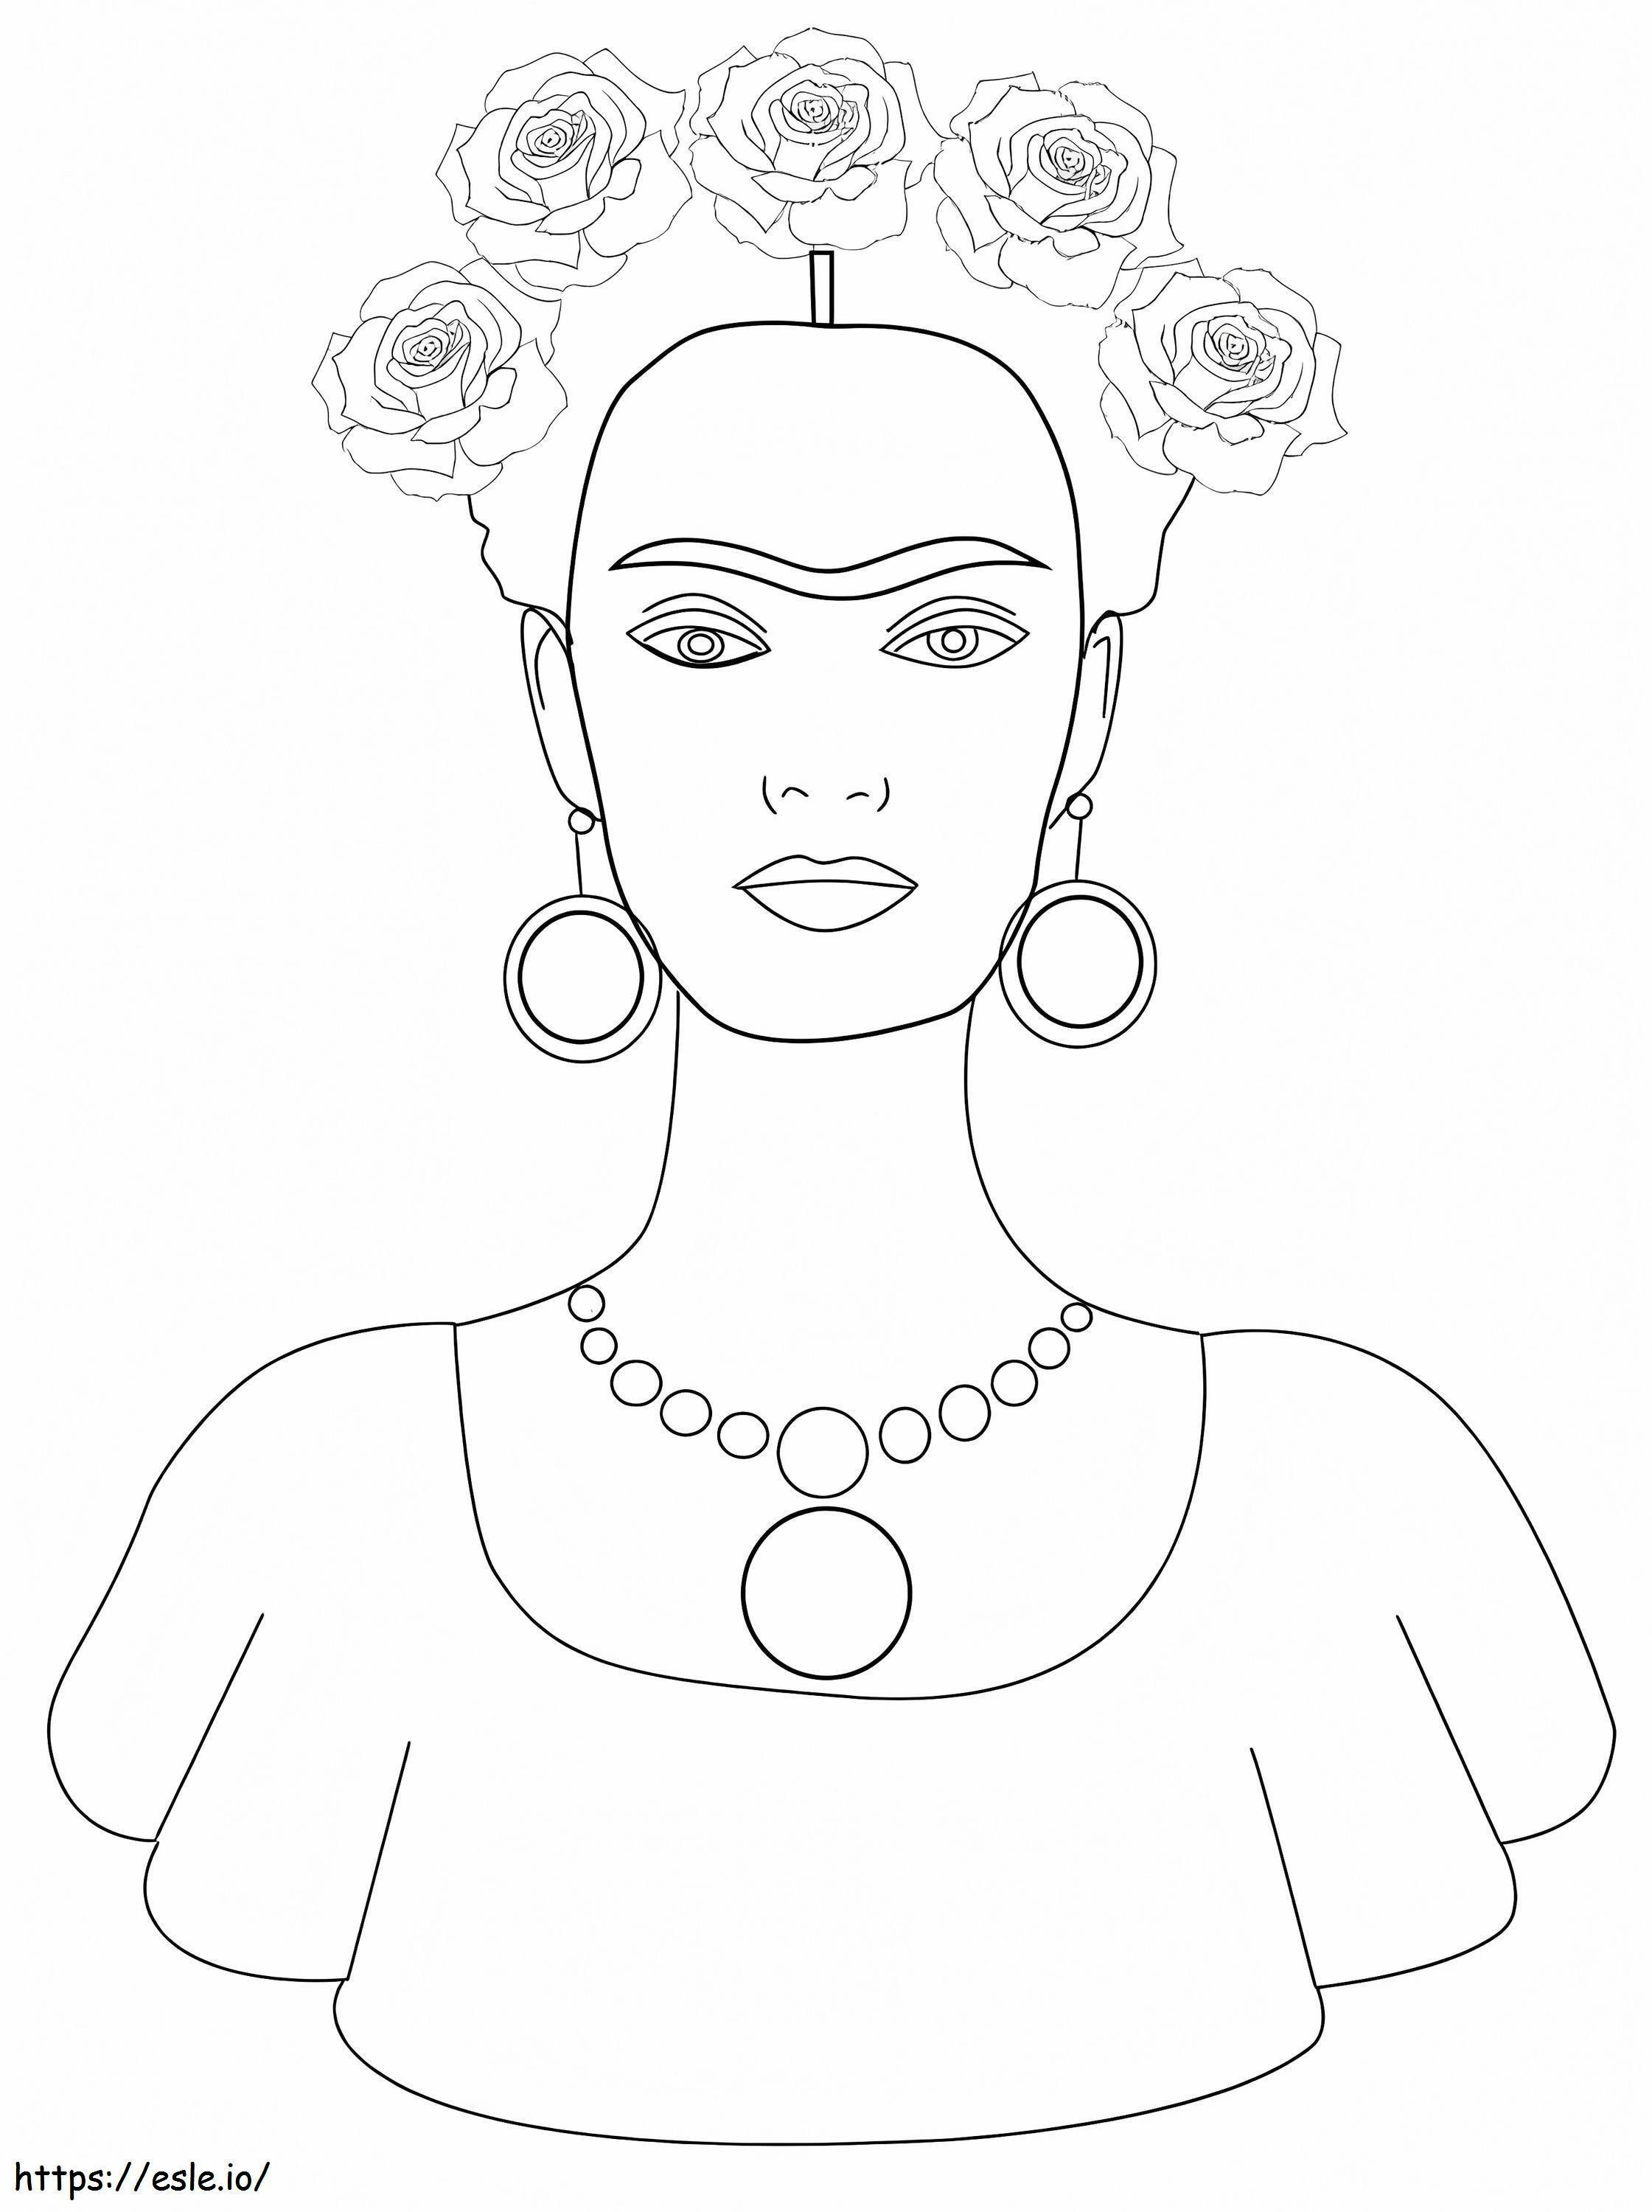 Frida Kahlo6 da colorare